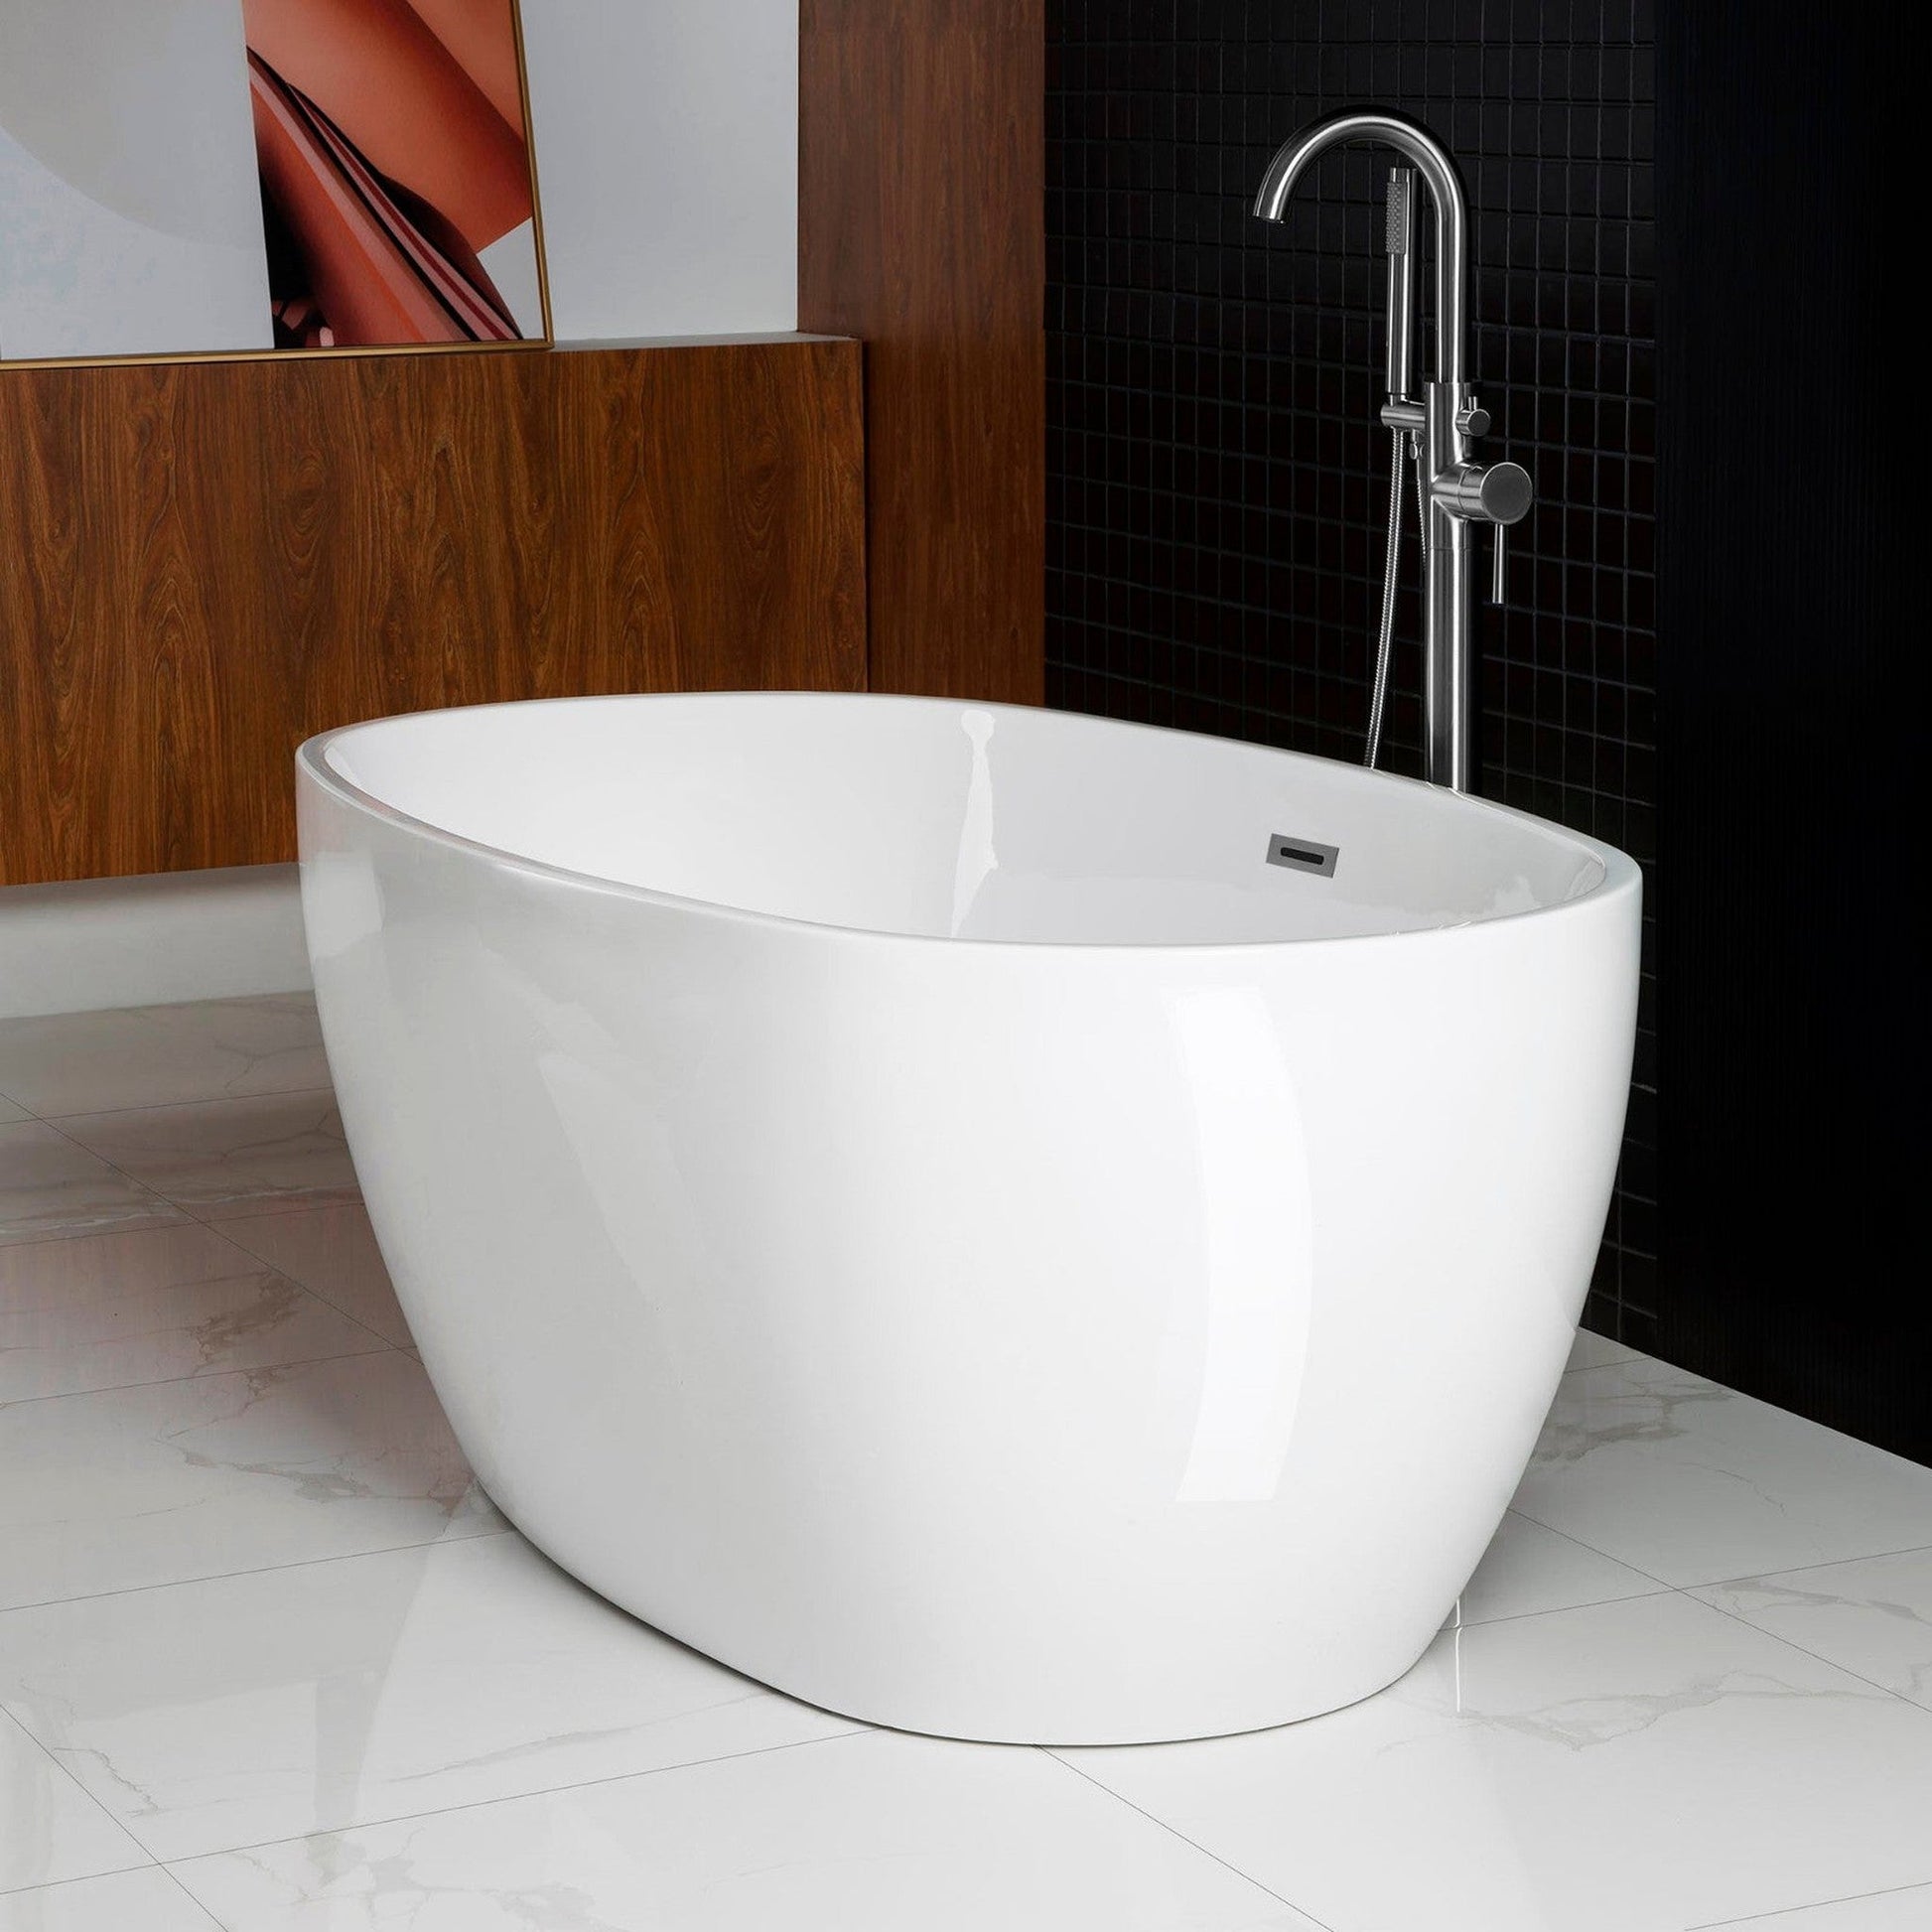 WoodBridge B0018 59" White Acrylic Freestanding Soaking Bathtub With Chrome Drain, Overflow, F0071CHVT Tub Filler and Caddy Tray